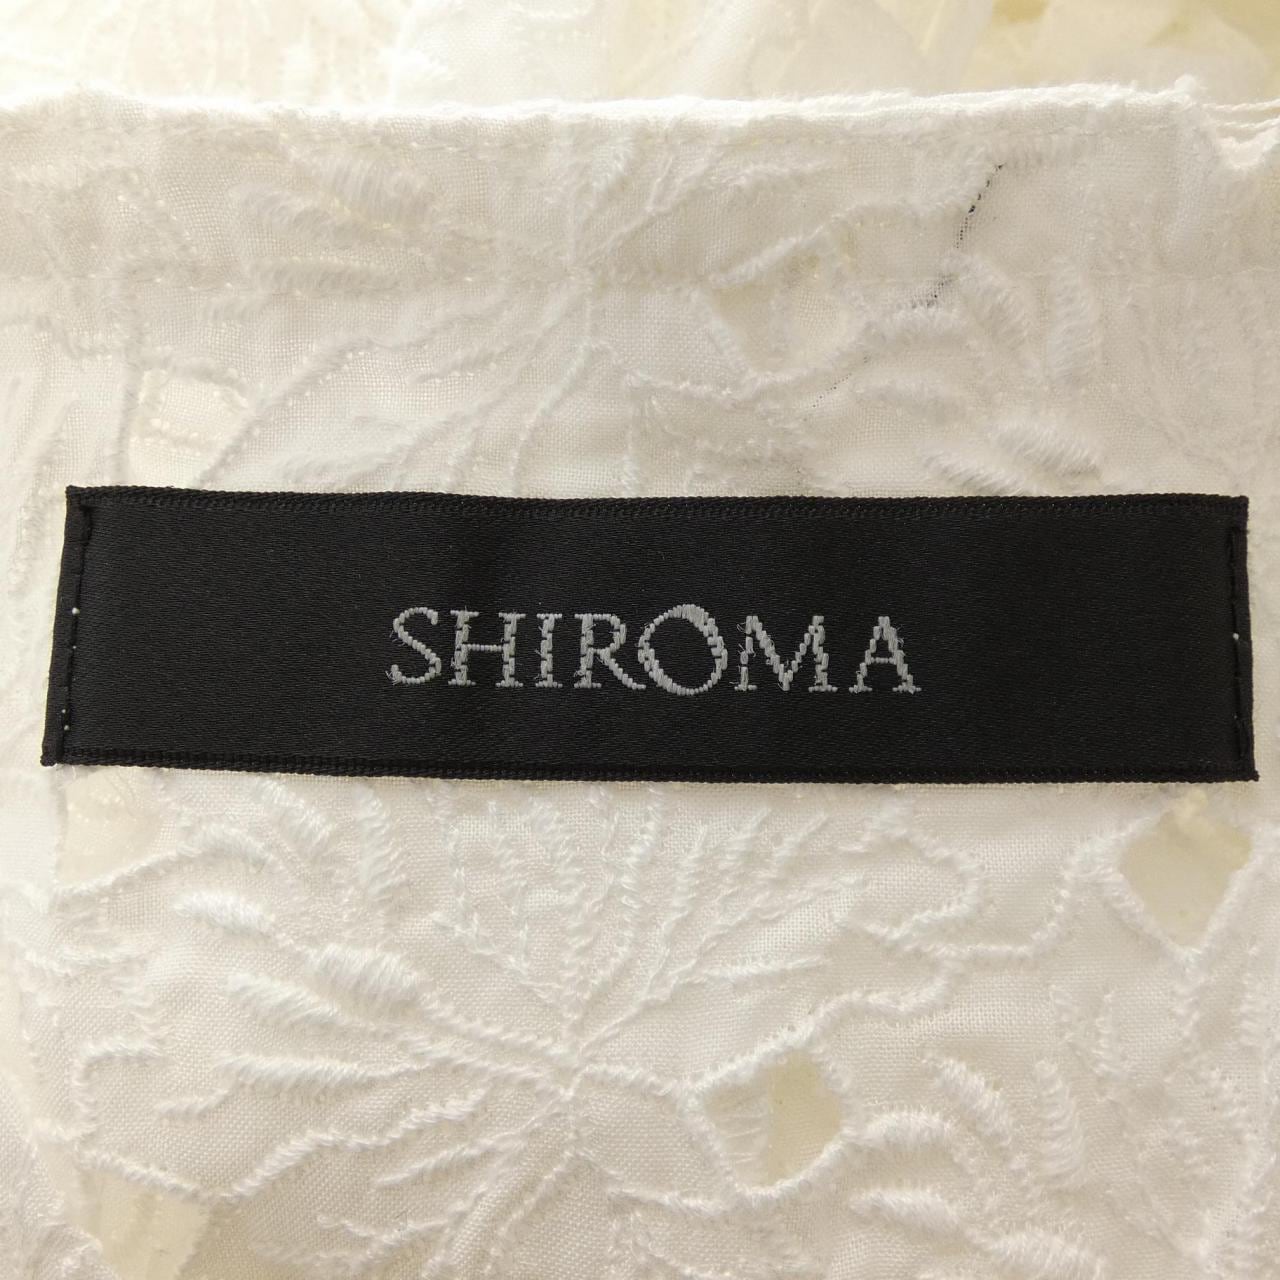 SHIROMA パンツ付属情報について